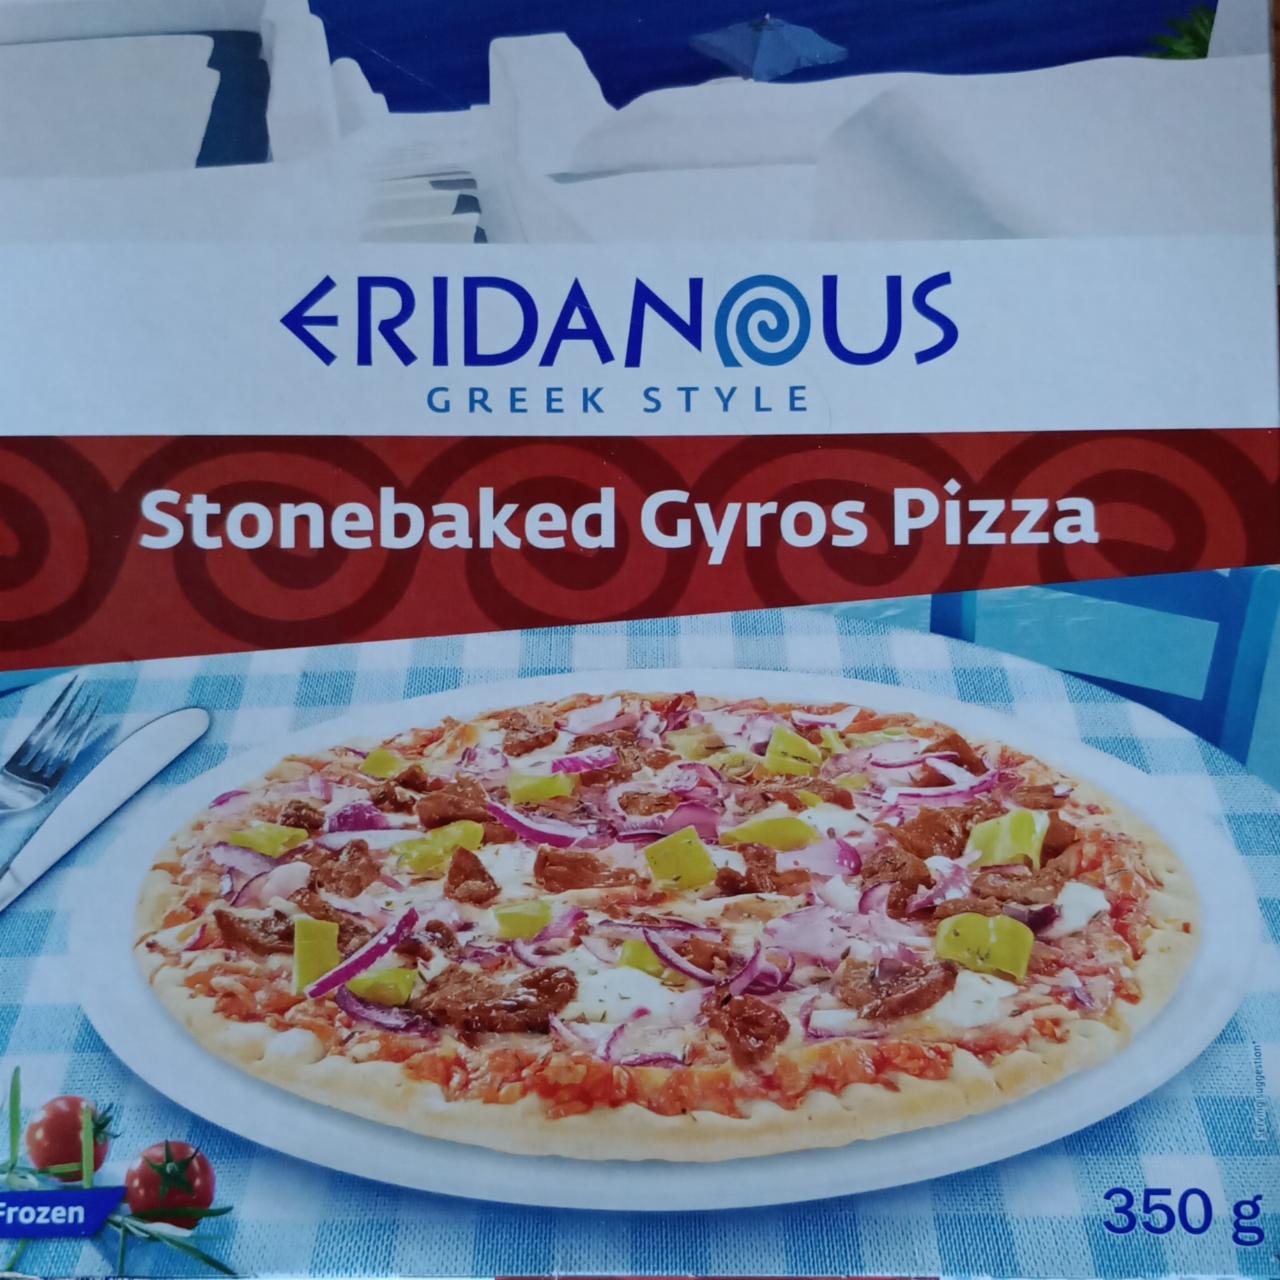 Fotografie - Stone Baked Gyros Pizza Eridanous